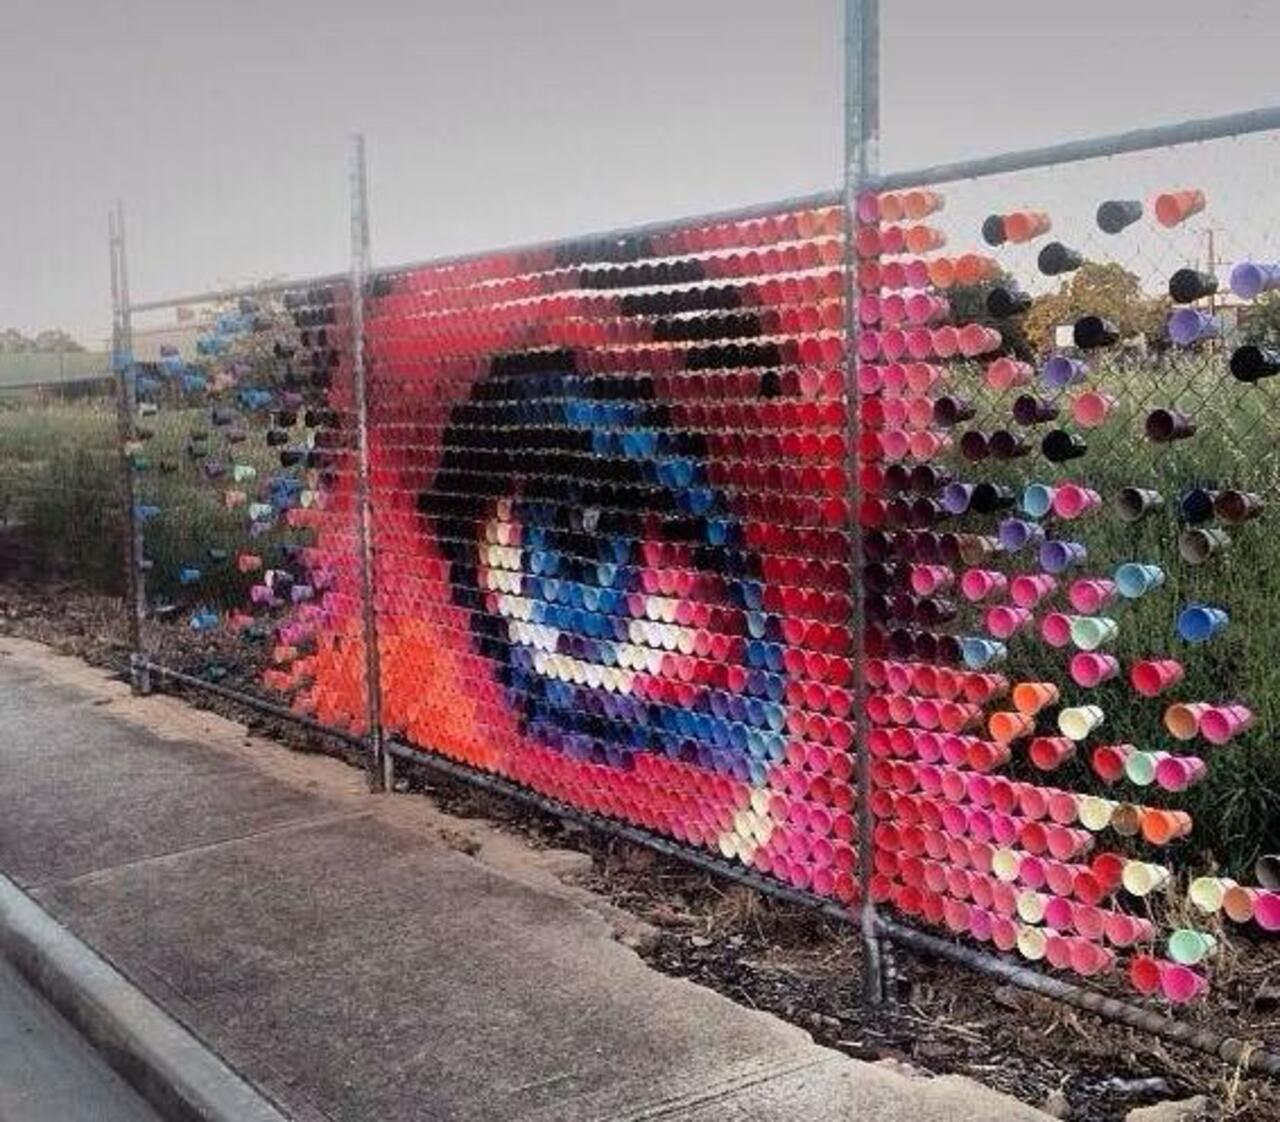 Unique Street Art piece by duo Hyde & Seek brought in an unlikely way 

#art #mural #graffiti #streetart http://t.co/nzlm16vG1p